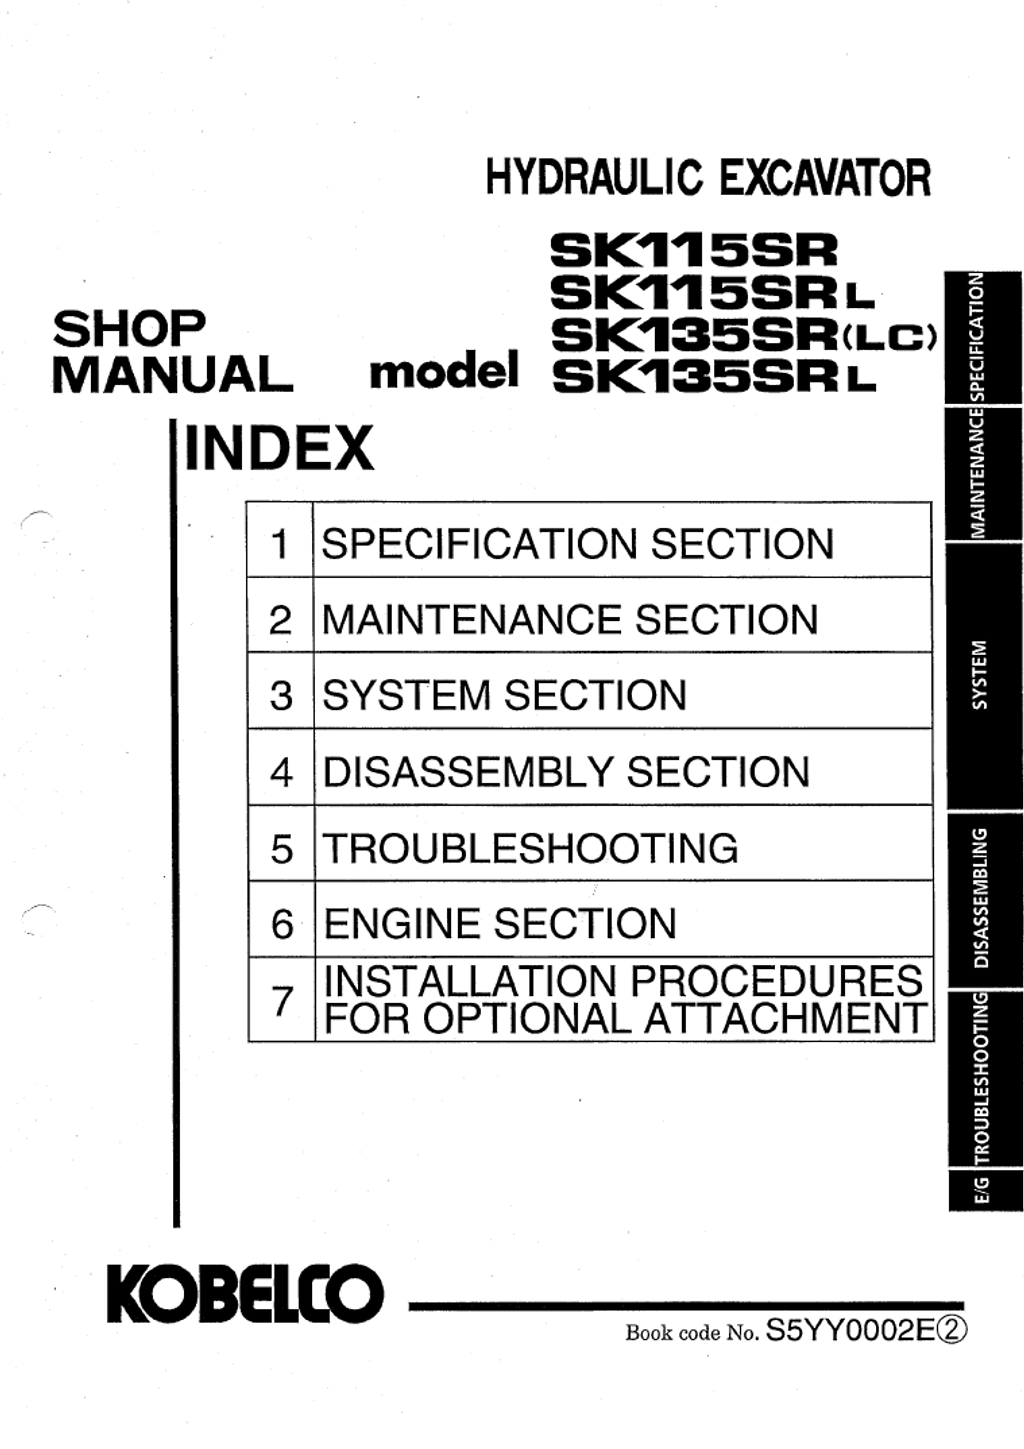 EPC17-Kobelco Shop Manual_09